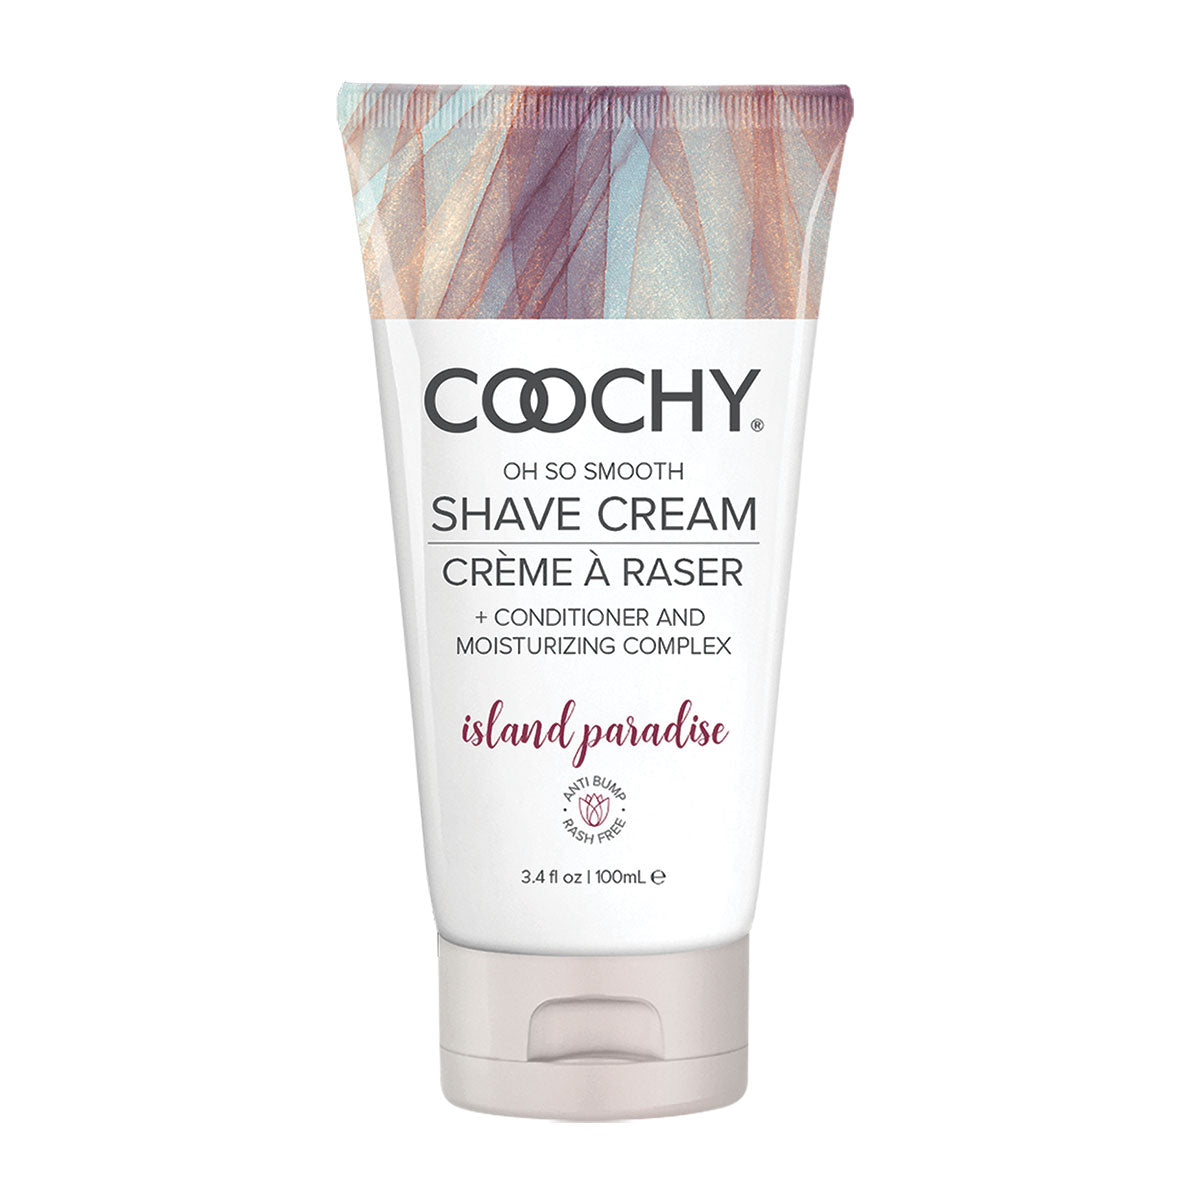 Coochy Shave Cream 3.4oz - Island Paradise